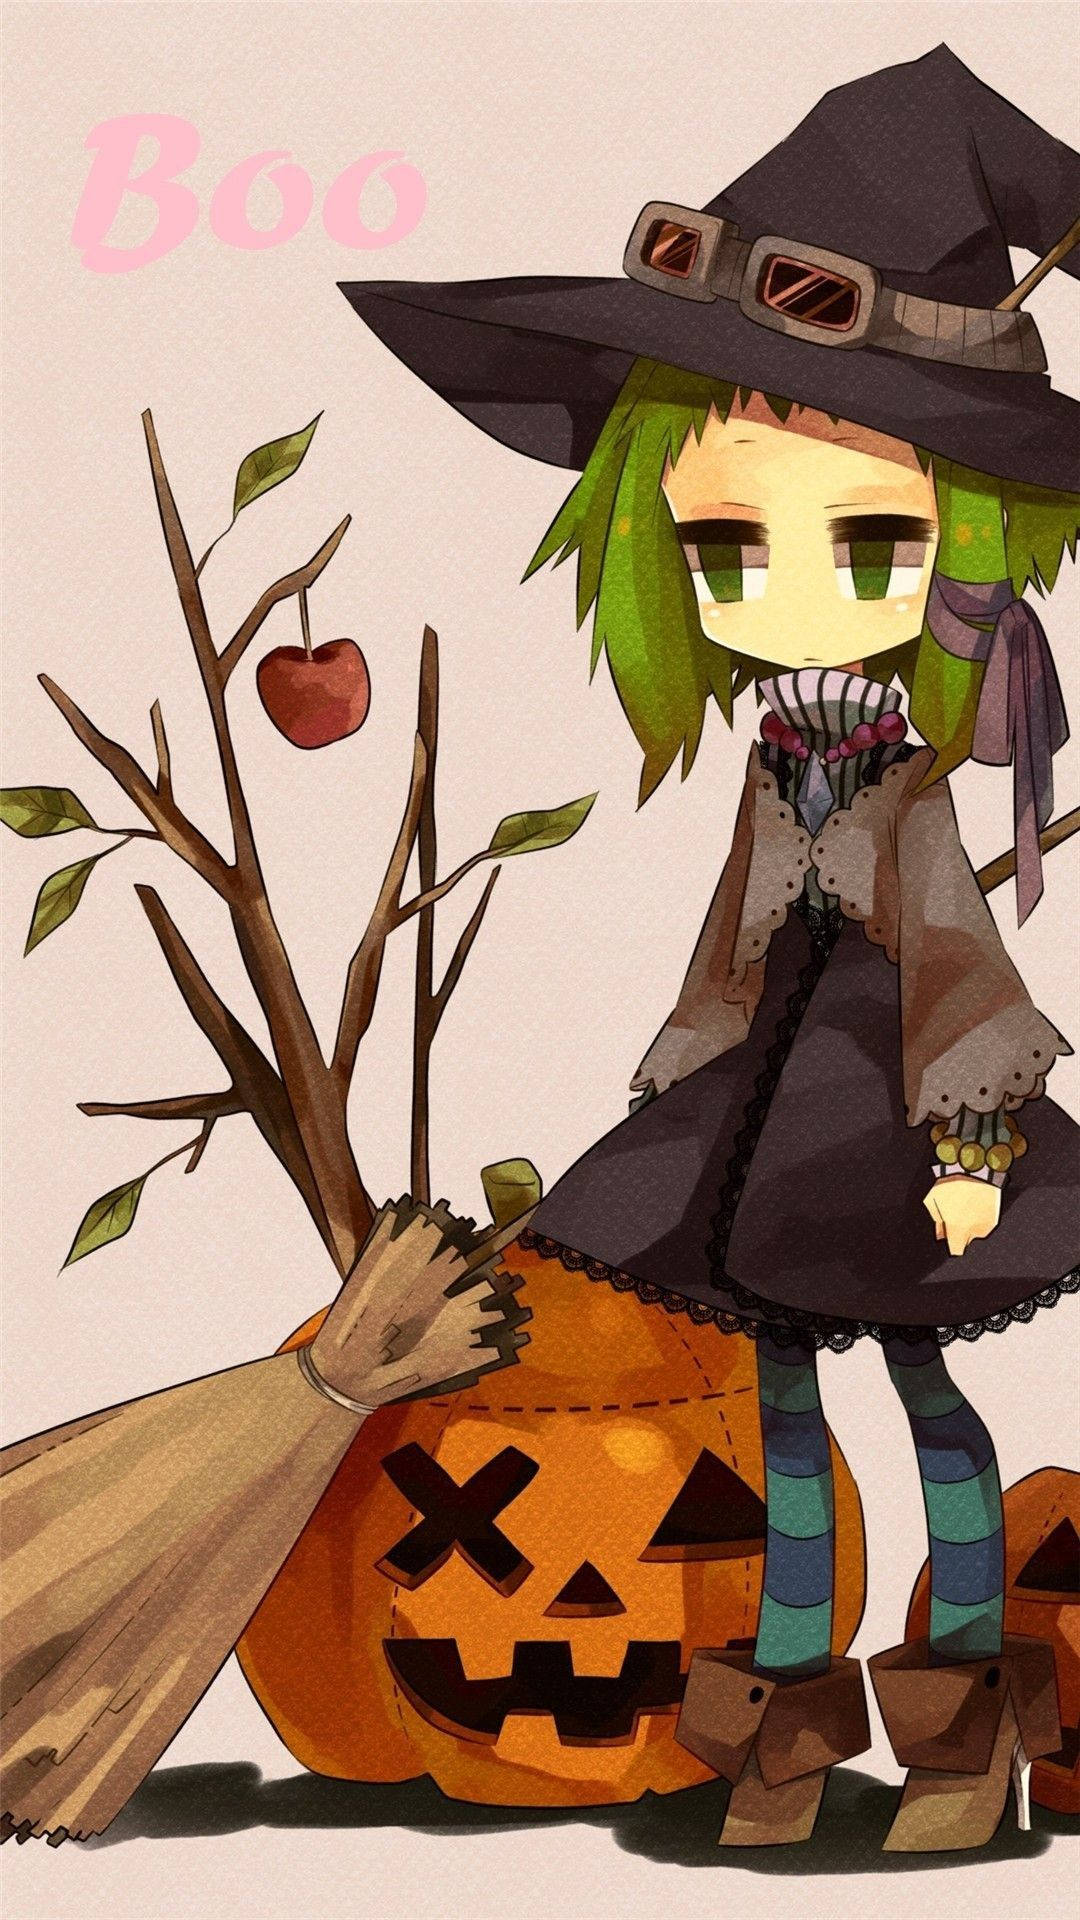 Halloween Anime Wallpaper 64 pictures